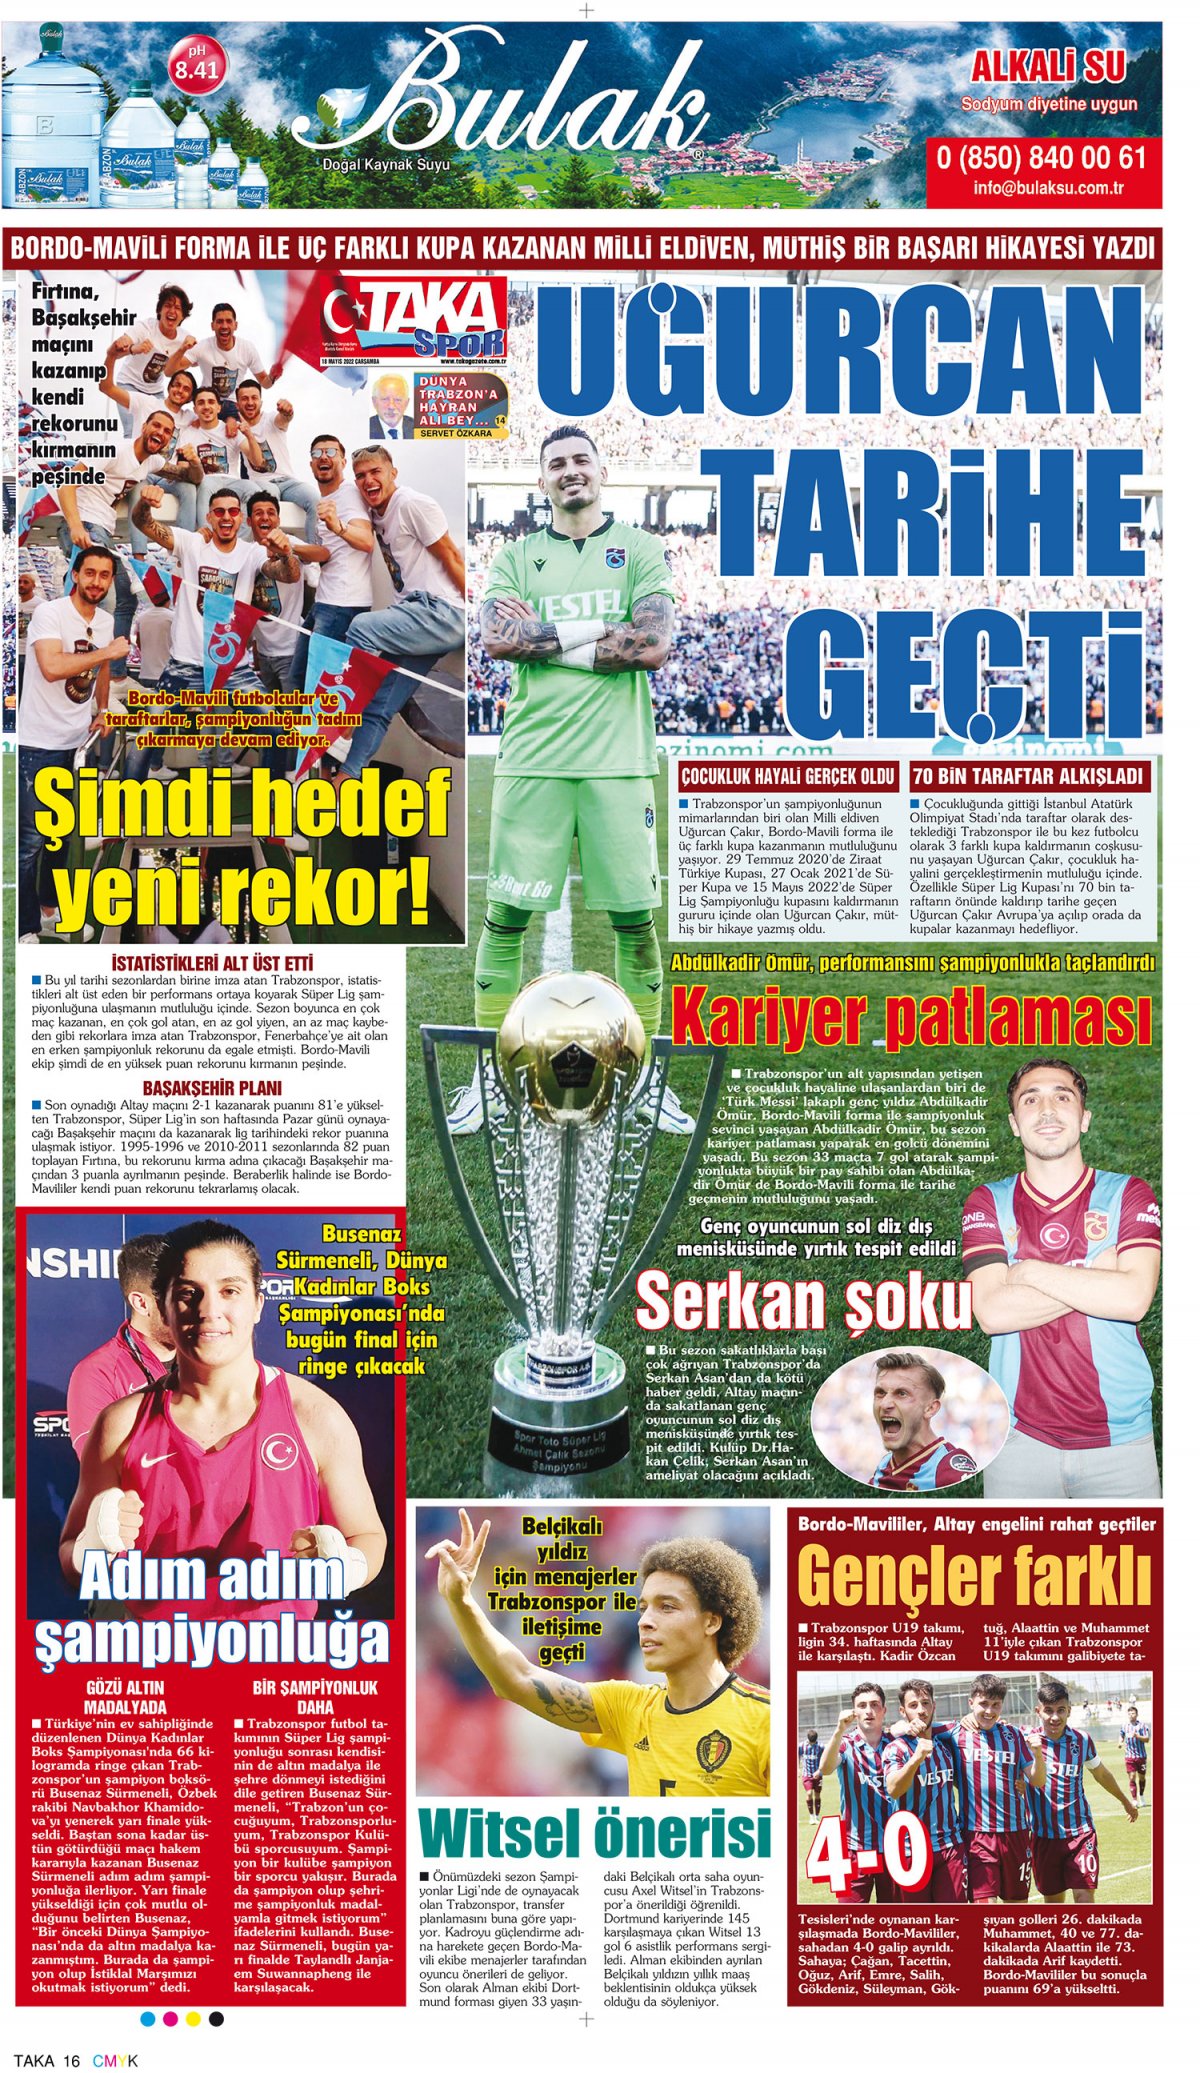 Taka Gazete - 18.05.2022 Manşeti